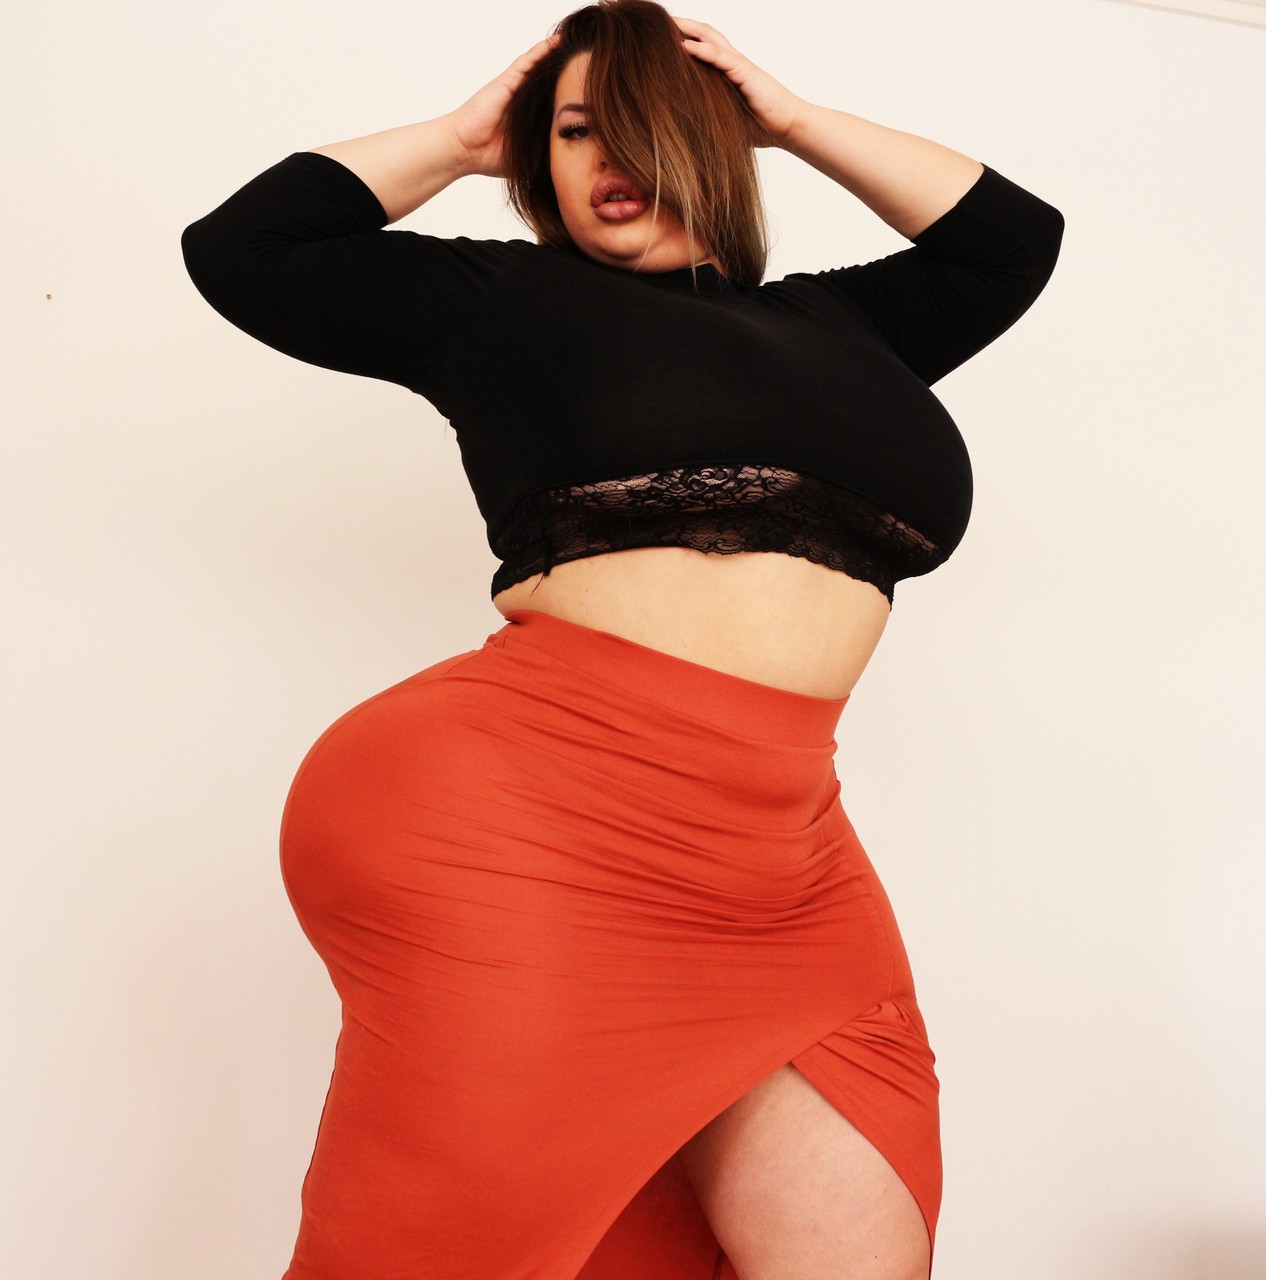 Stunning MILF fatty Natasha Crown flaunting her very big ass in a tight skirt porn photo #423816664